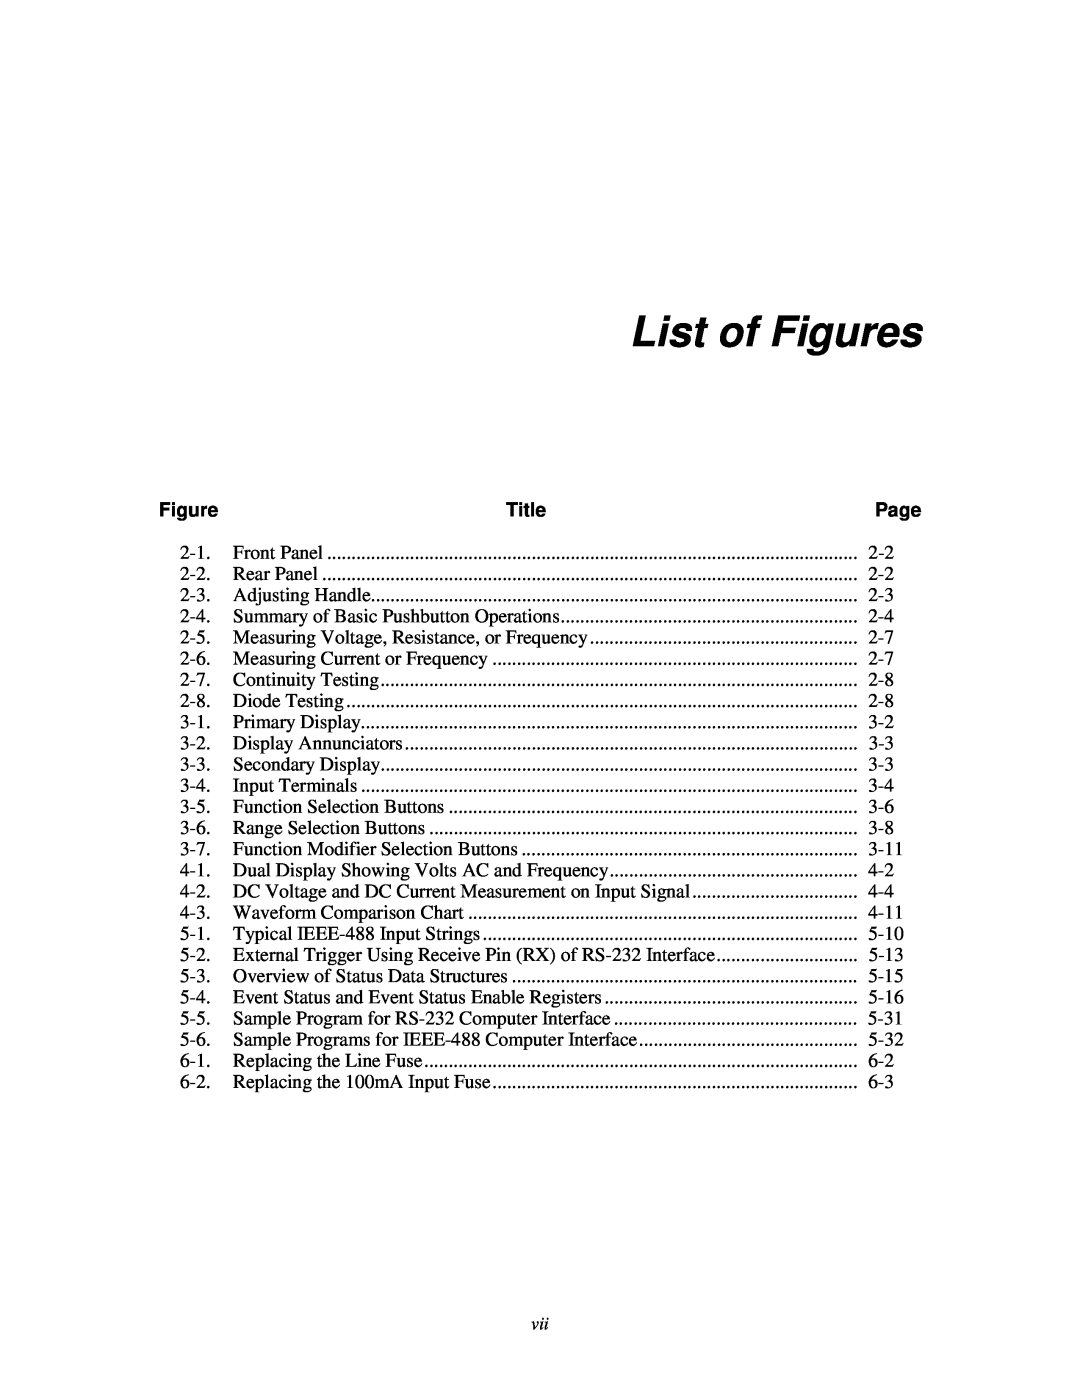 Fluke 45 user manual List of Figures, Title 